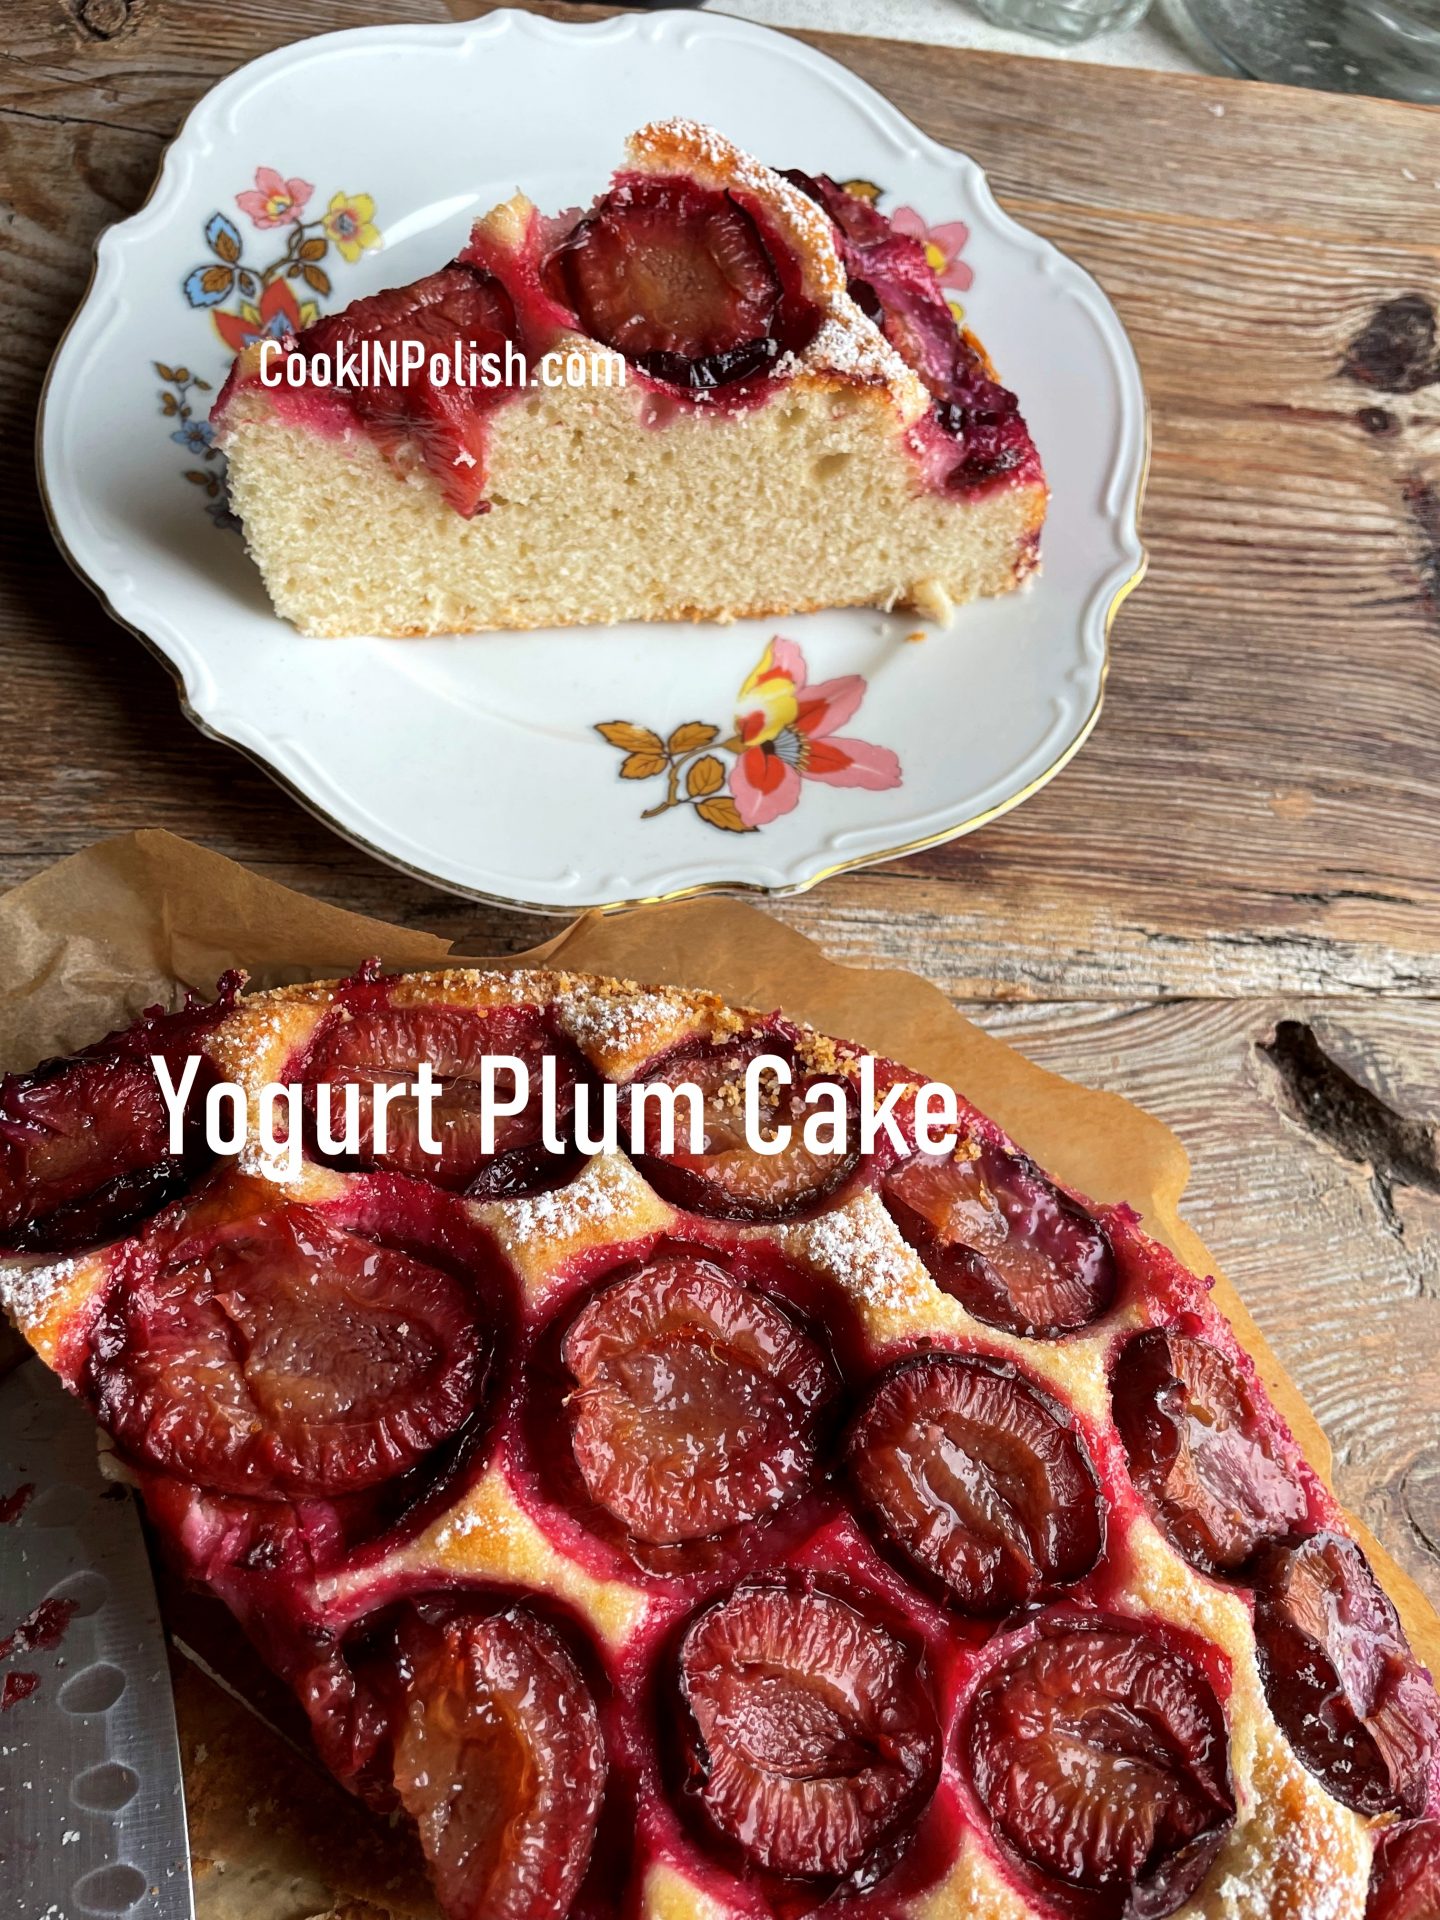 Yogurt Plum Cake